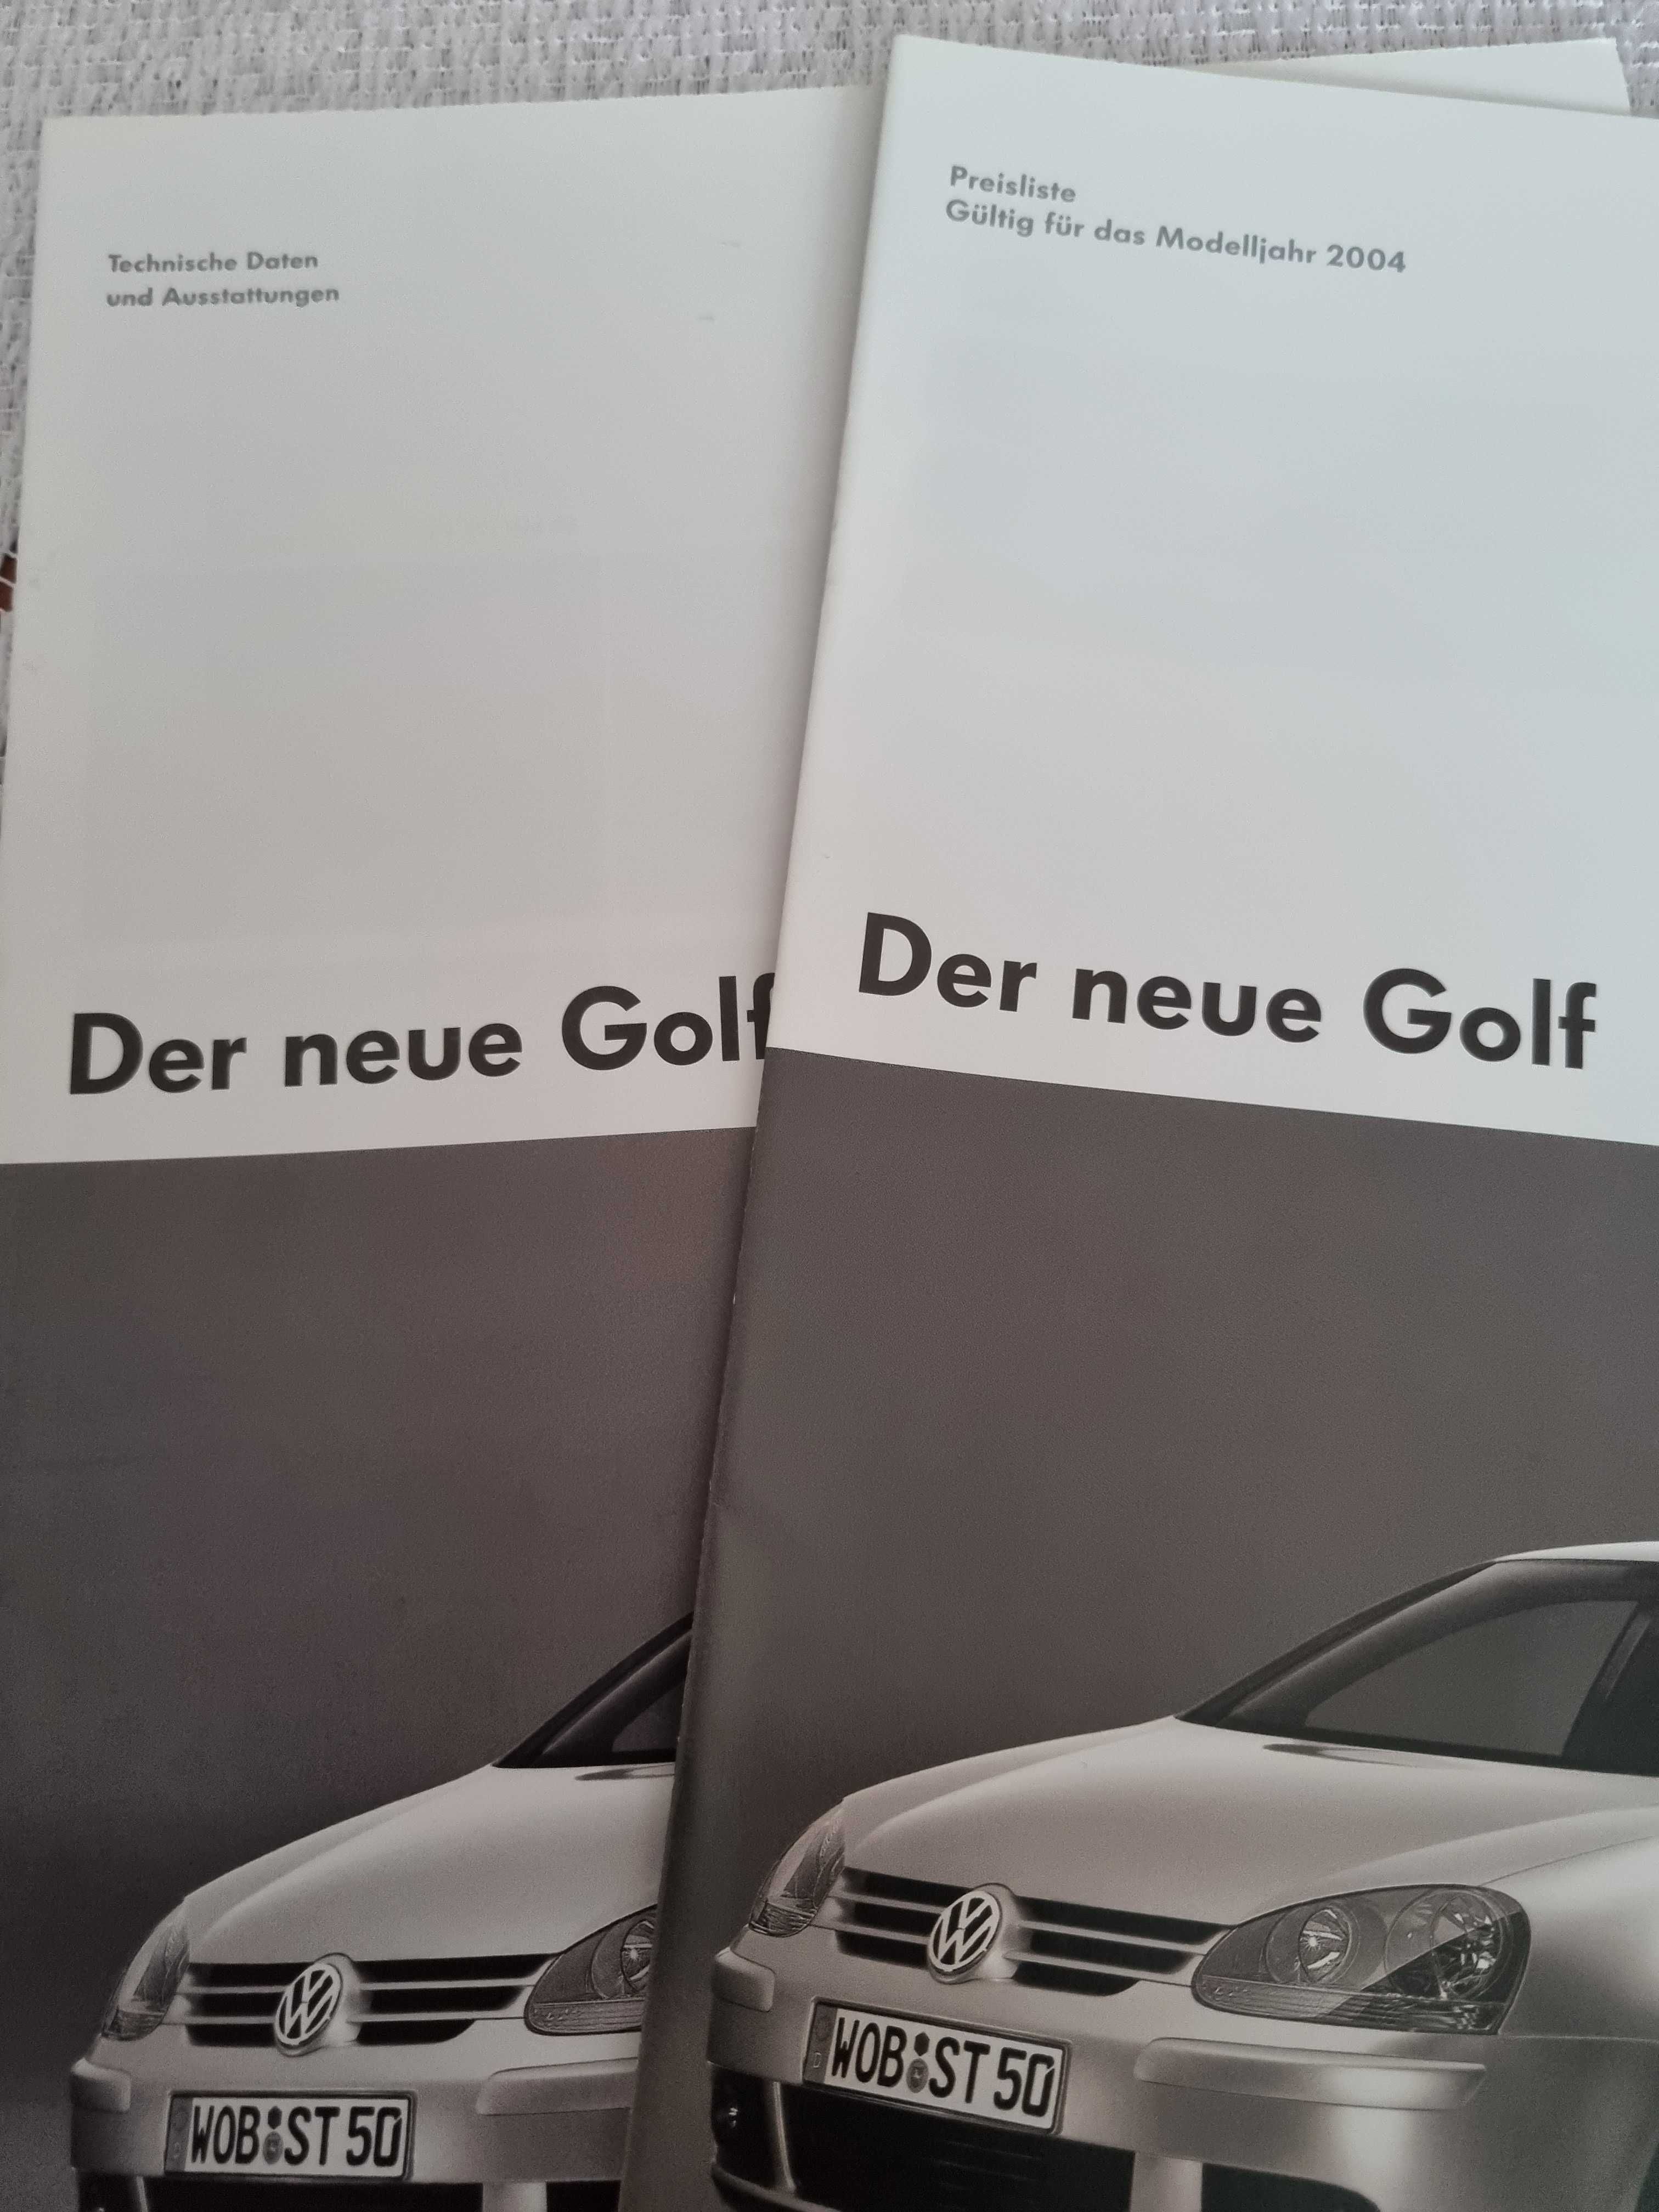 Prospekt VW Golf V  z 2003/2004r